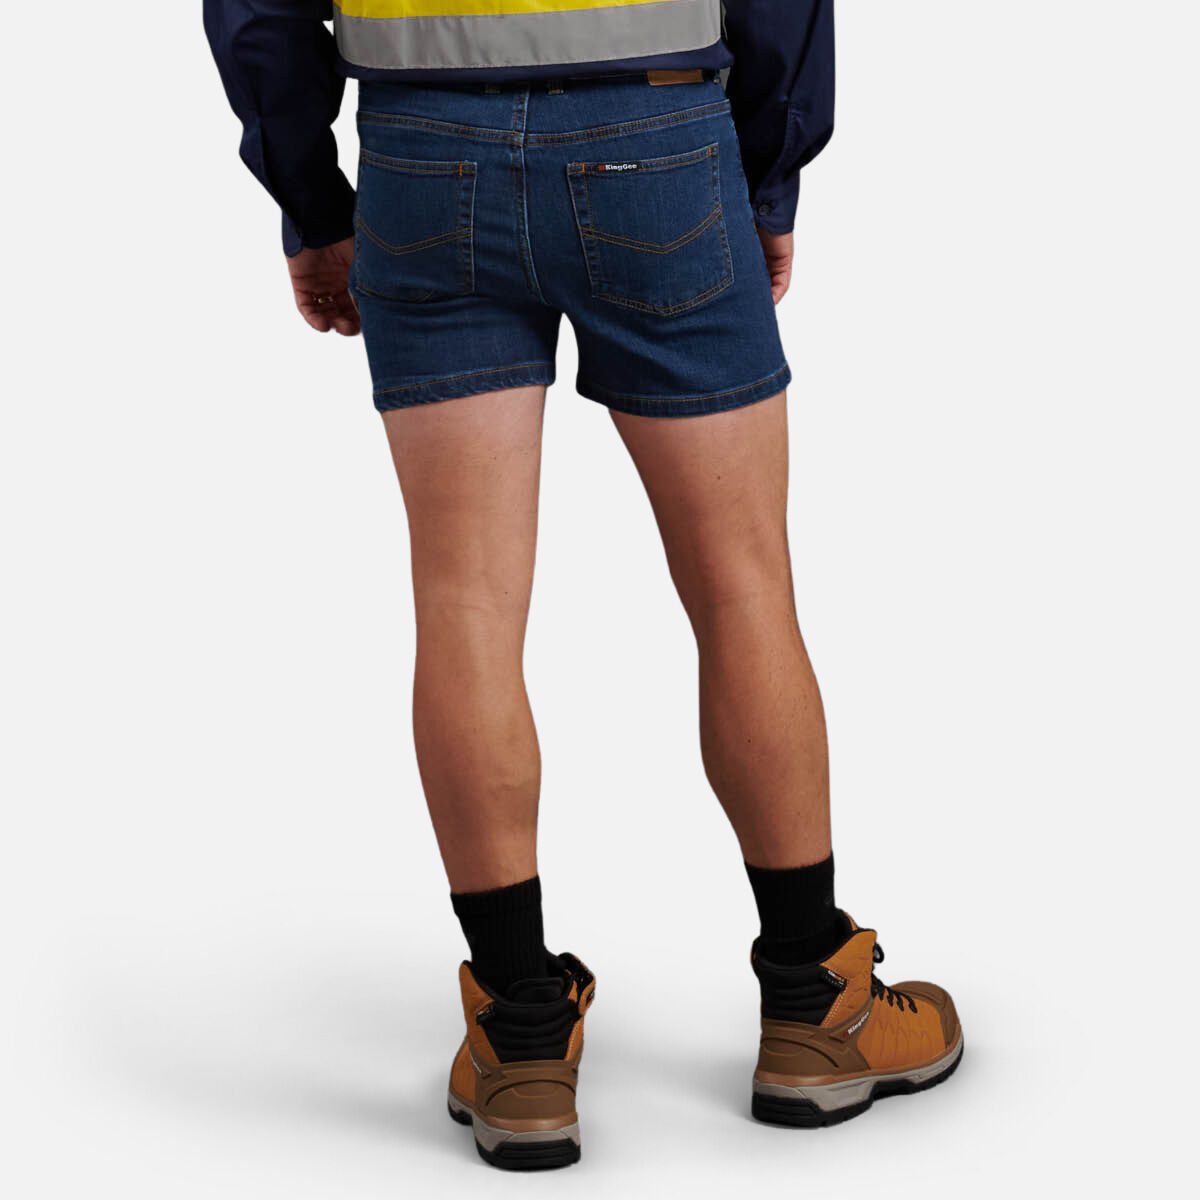 WEIV Mens Shorts Denim Short Ripped Jeans Midi Pants Casual Shorts Jean  Slim Fit | eBay